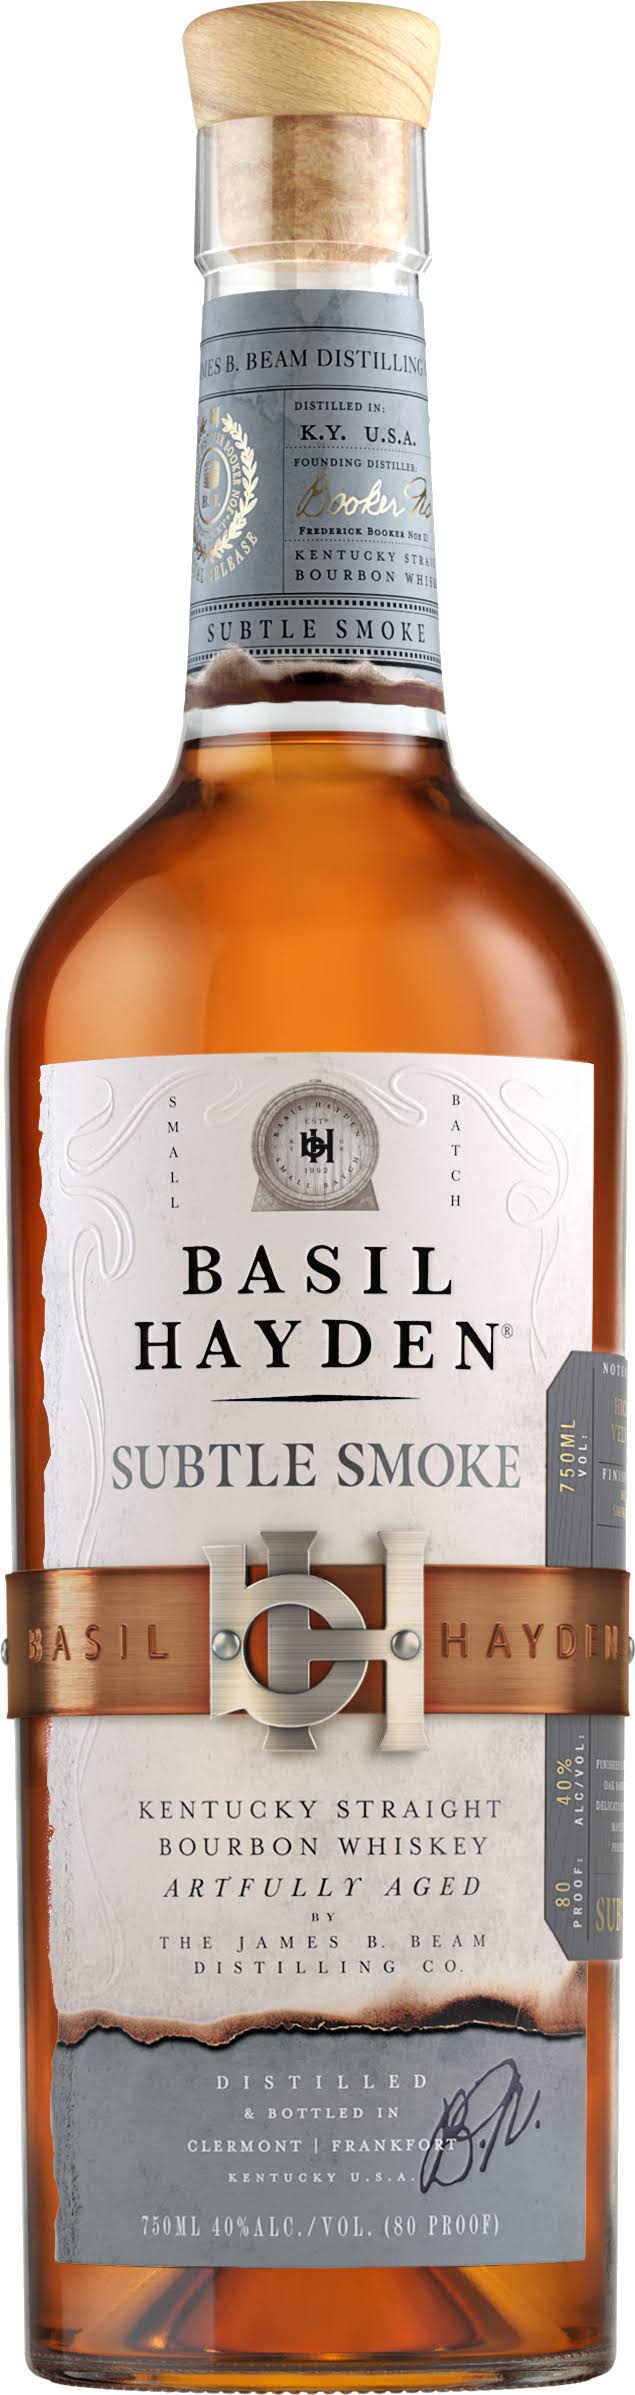 Basil Hayden Bourbon Subtle Smoke 750ml